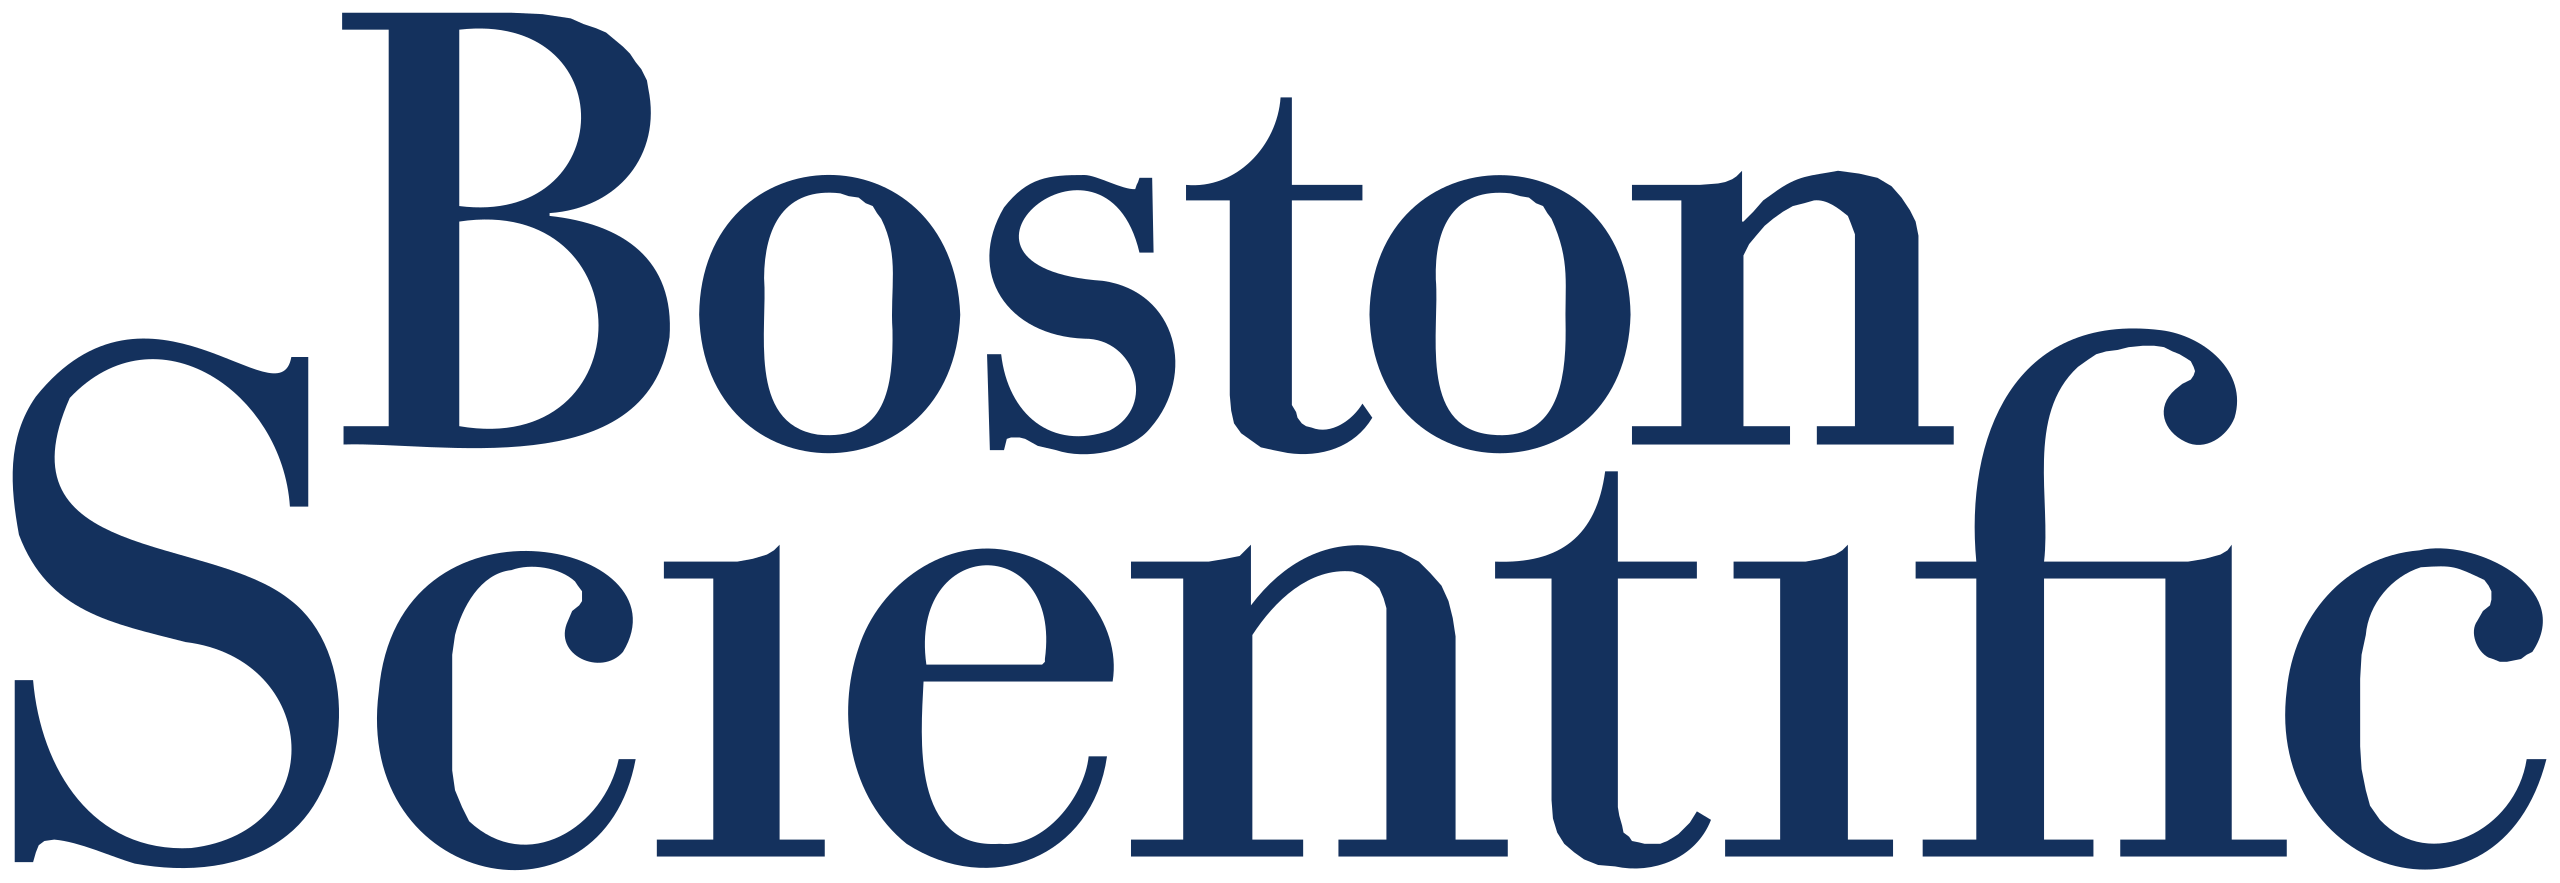 Boston_Scientific_logo.png